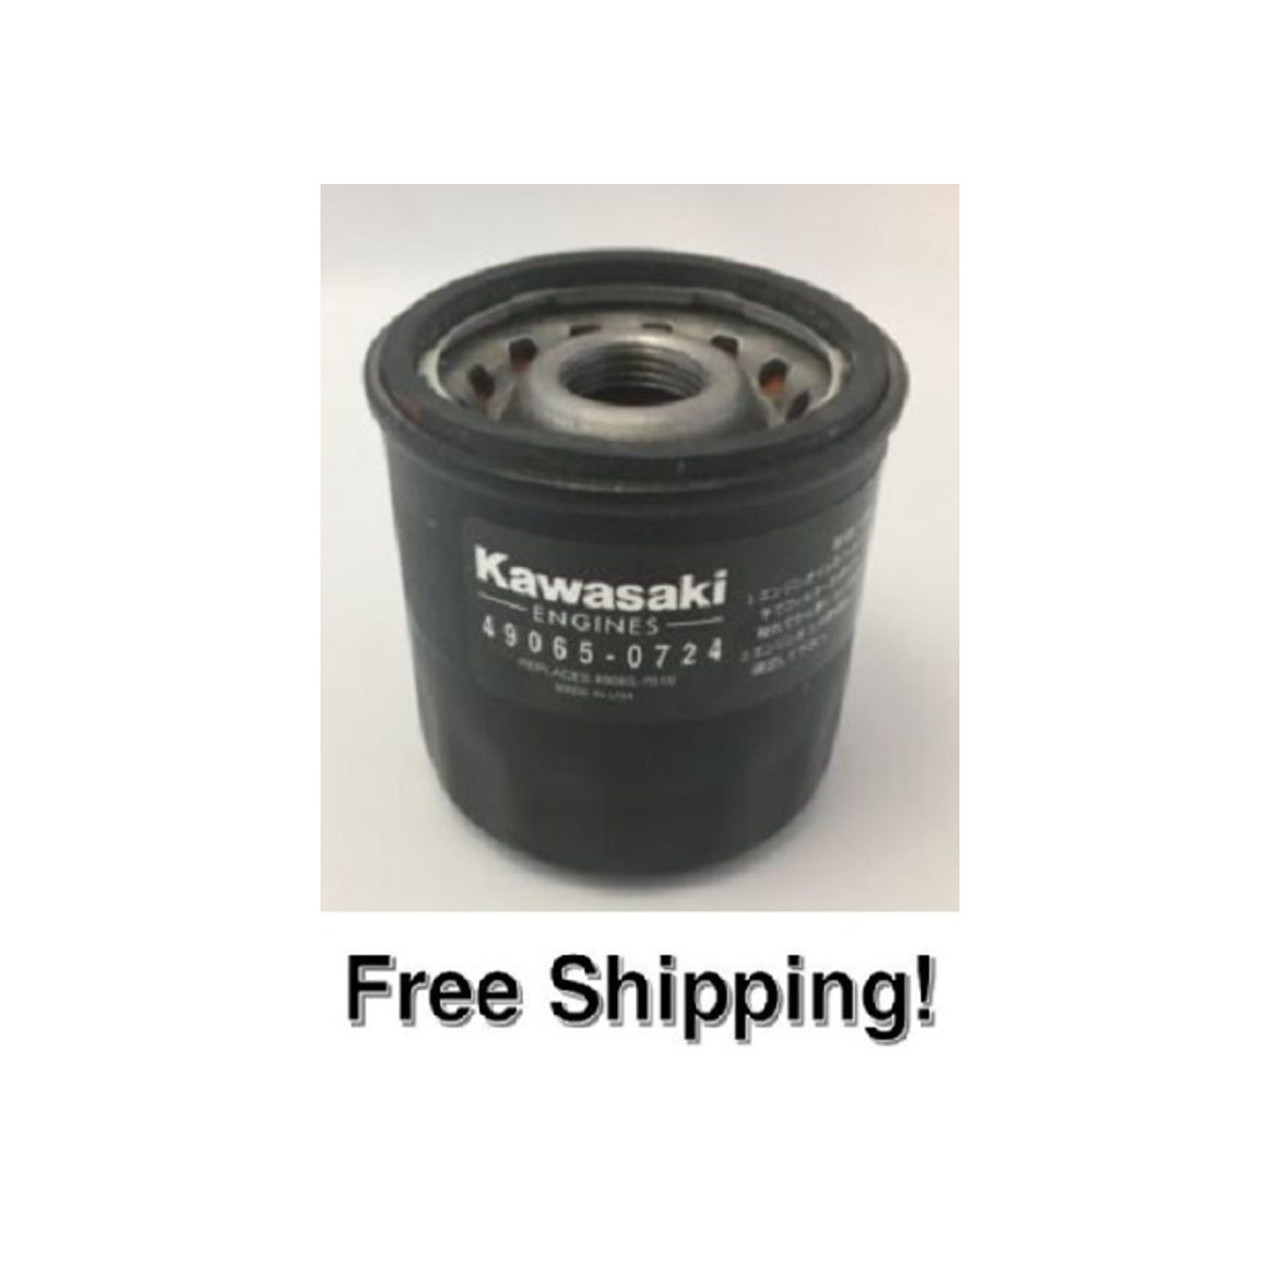 Kawasaki Engine Oil Filter 49065-0724